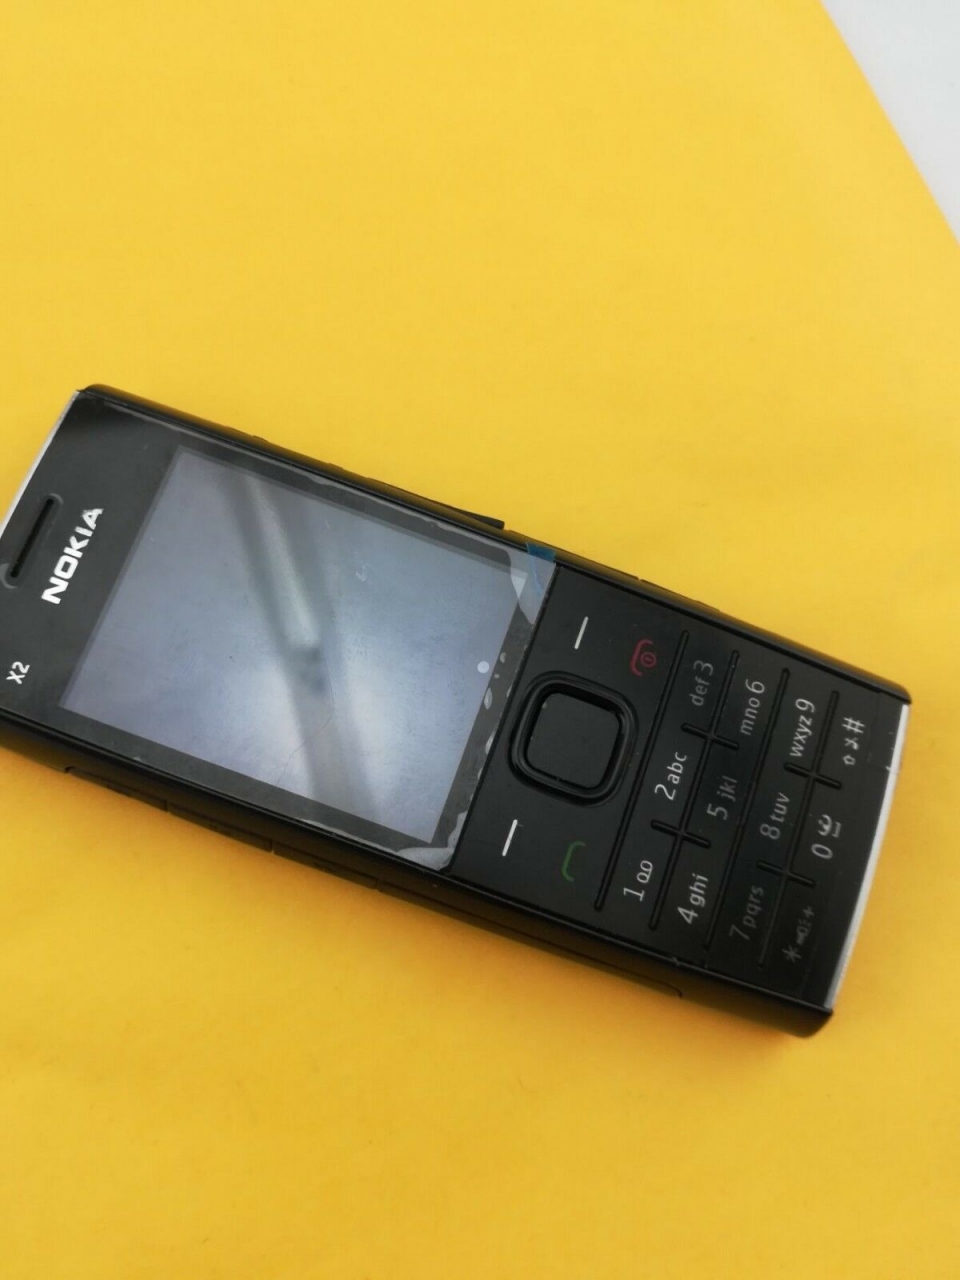 Refurbished phone Nokia X2-00 Bluetooth FM JAVA 5MP Cell Phones Free Shipping black 13